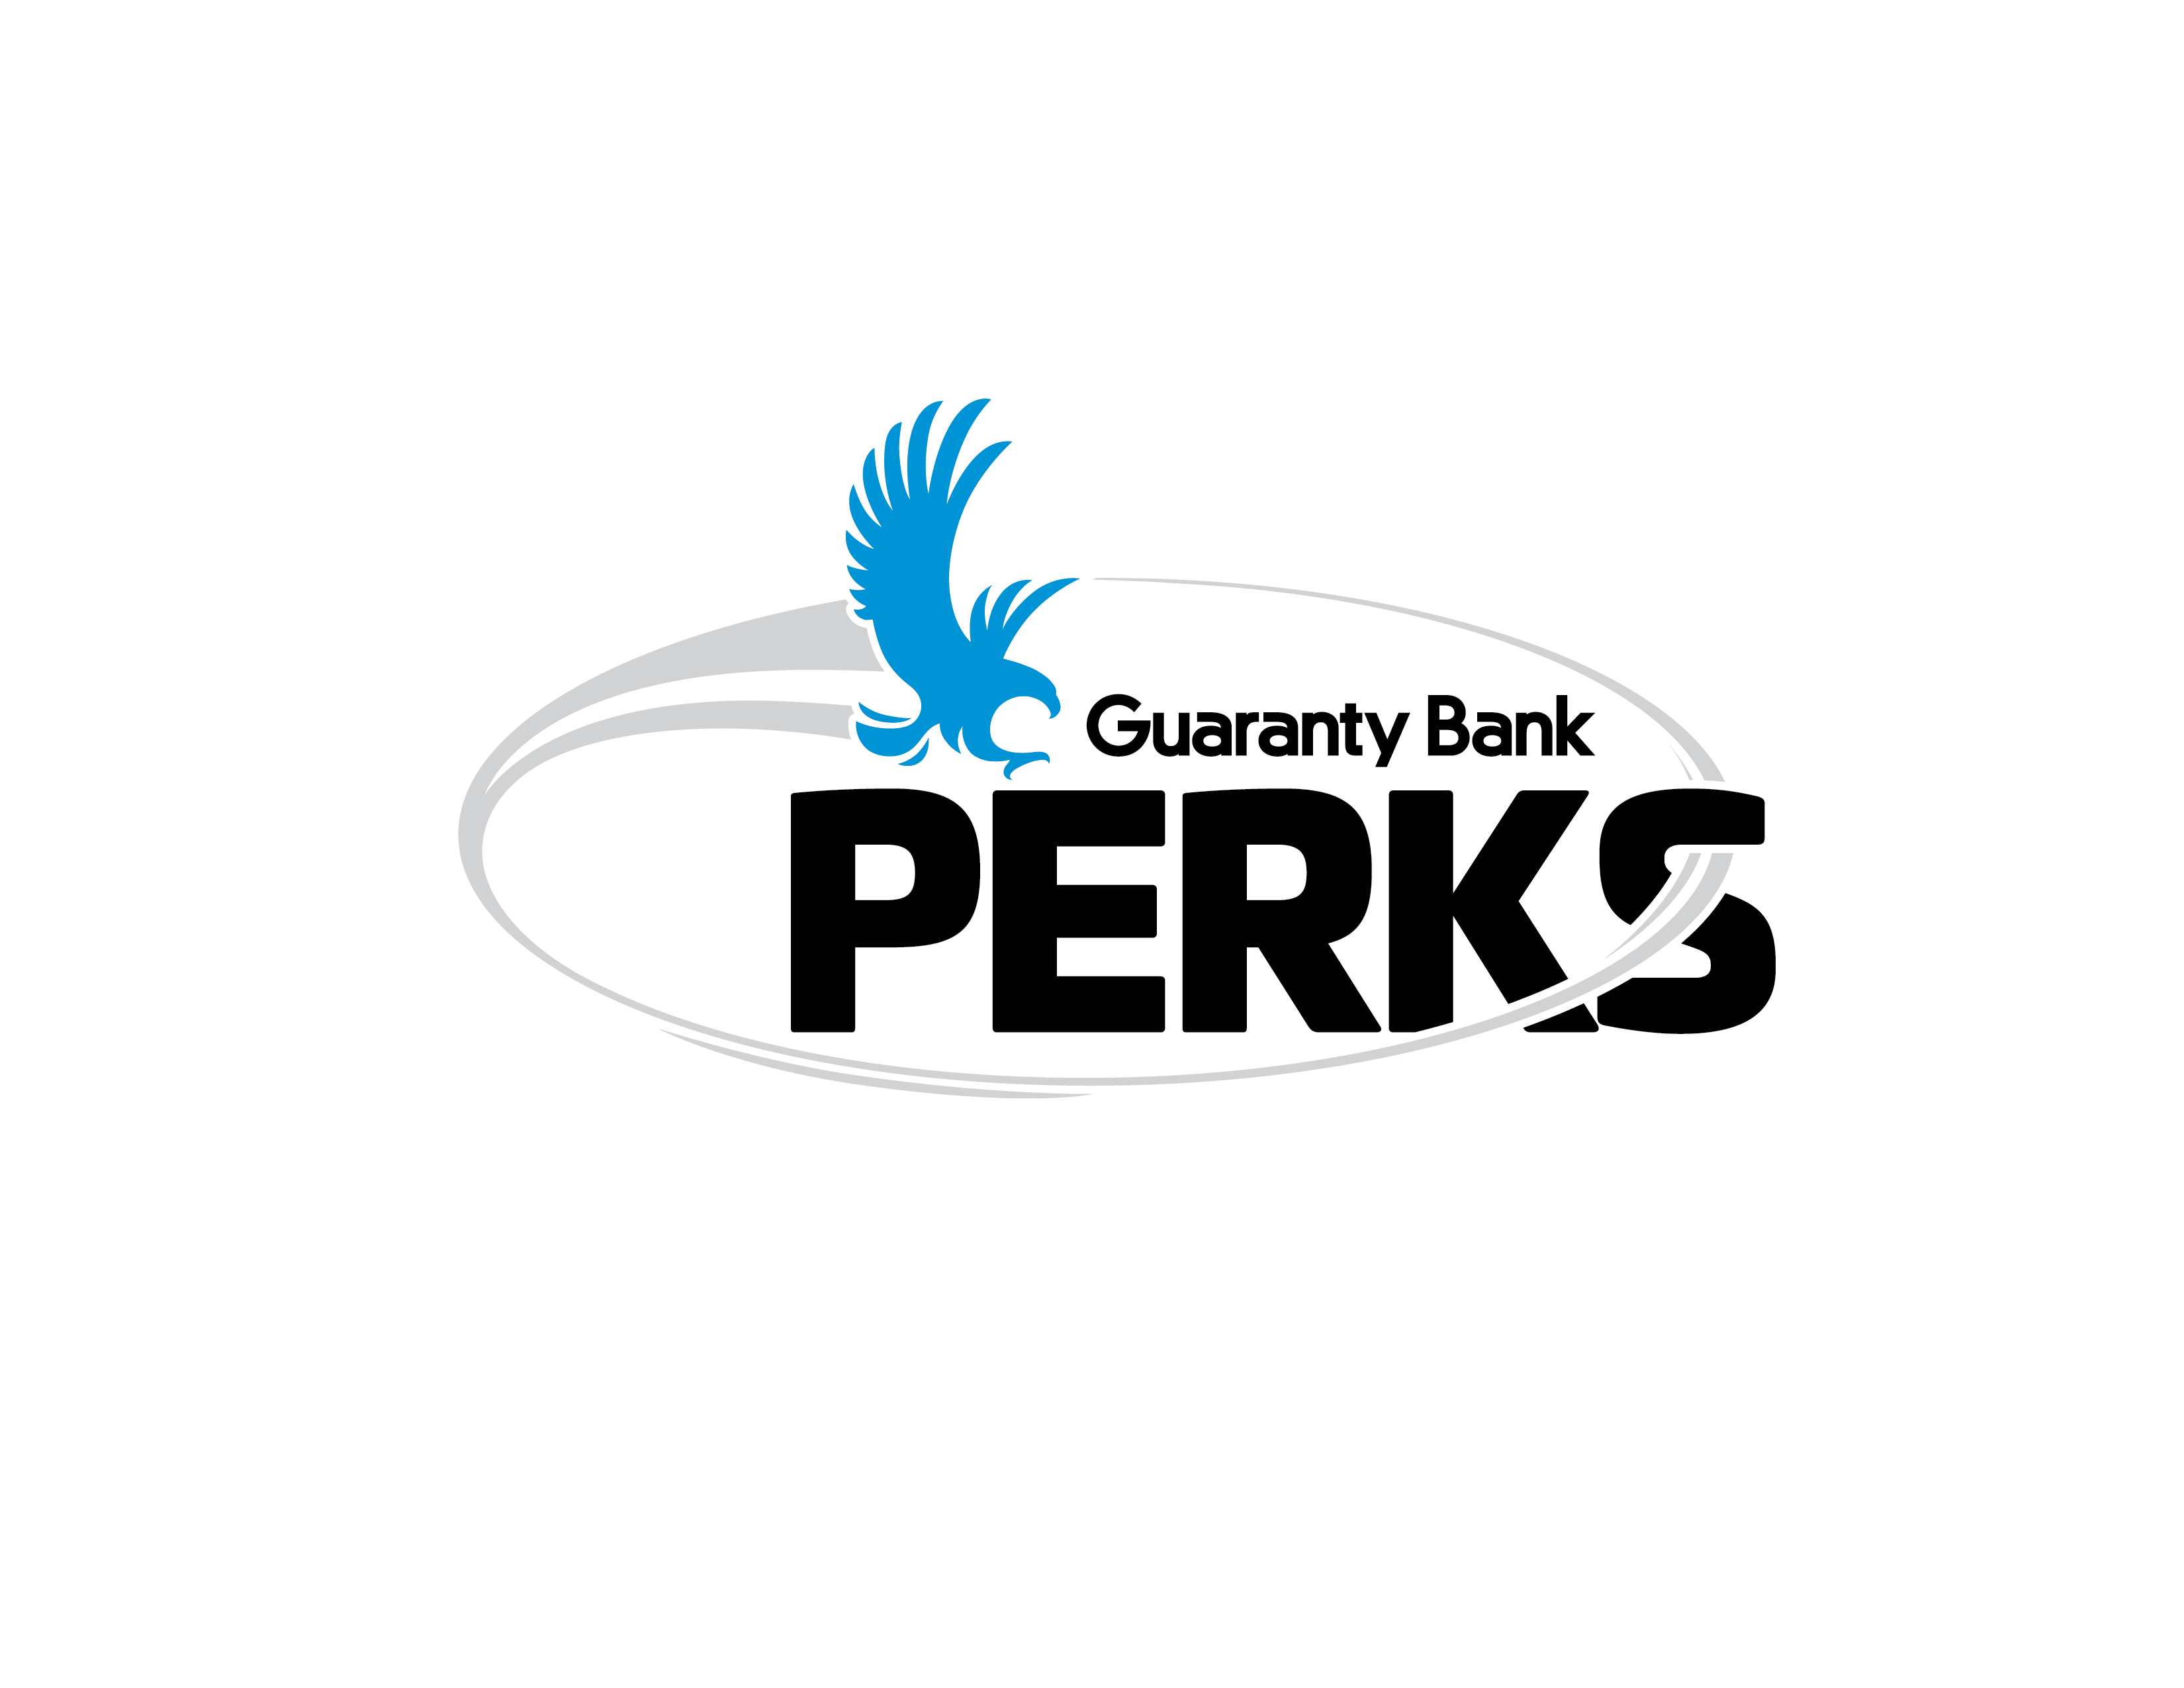 Guaranty Bank Perks Logo